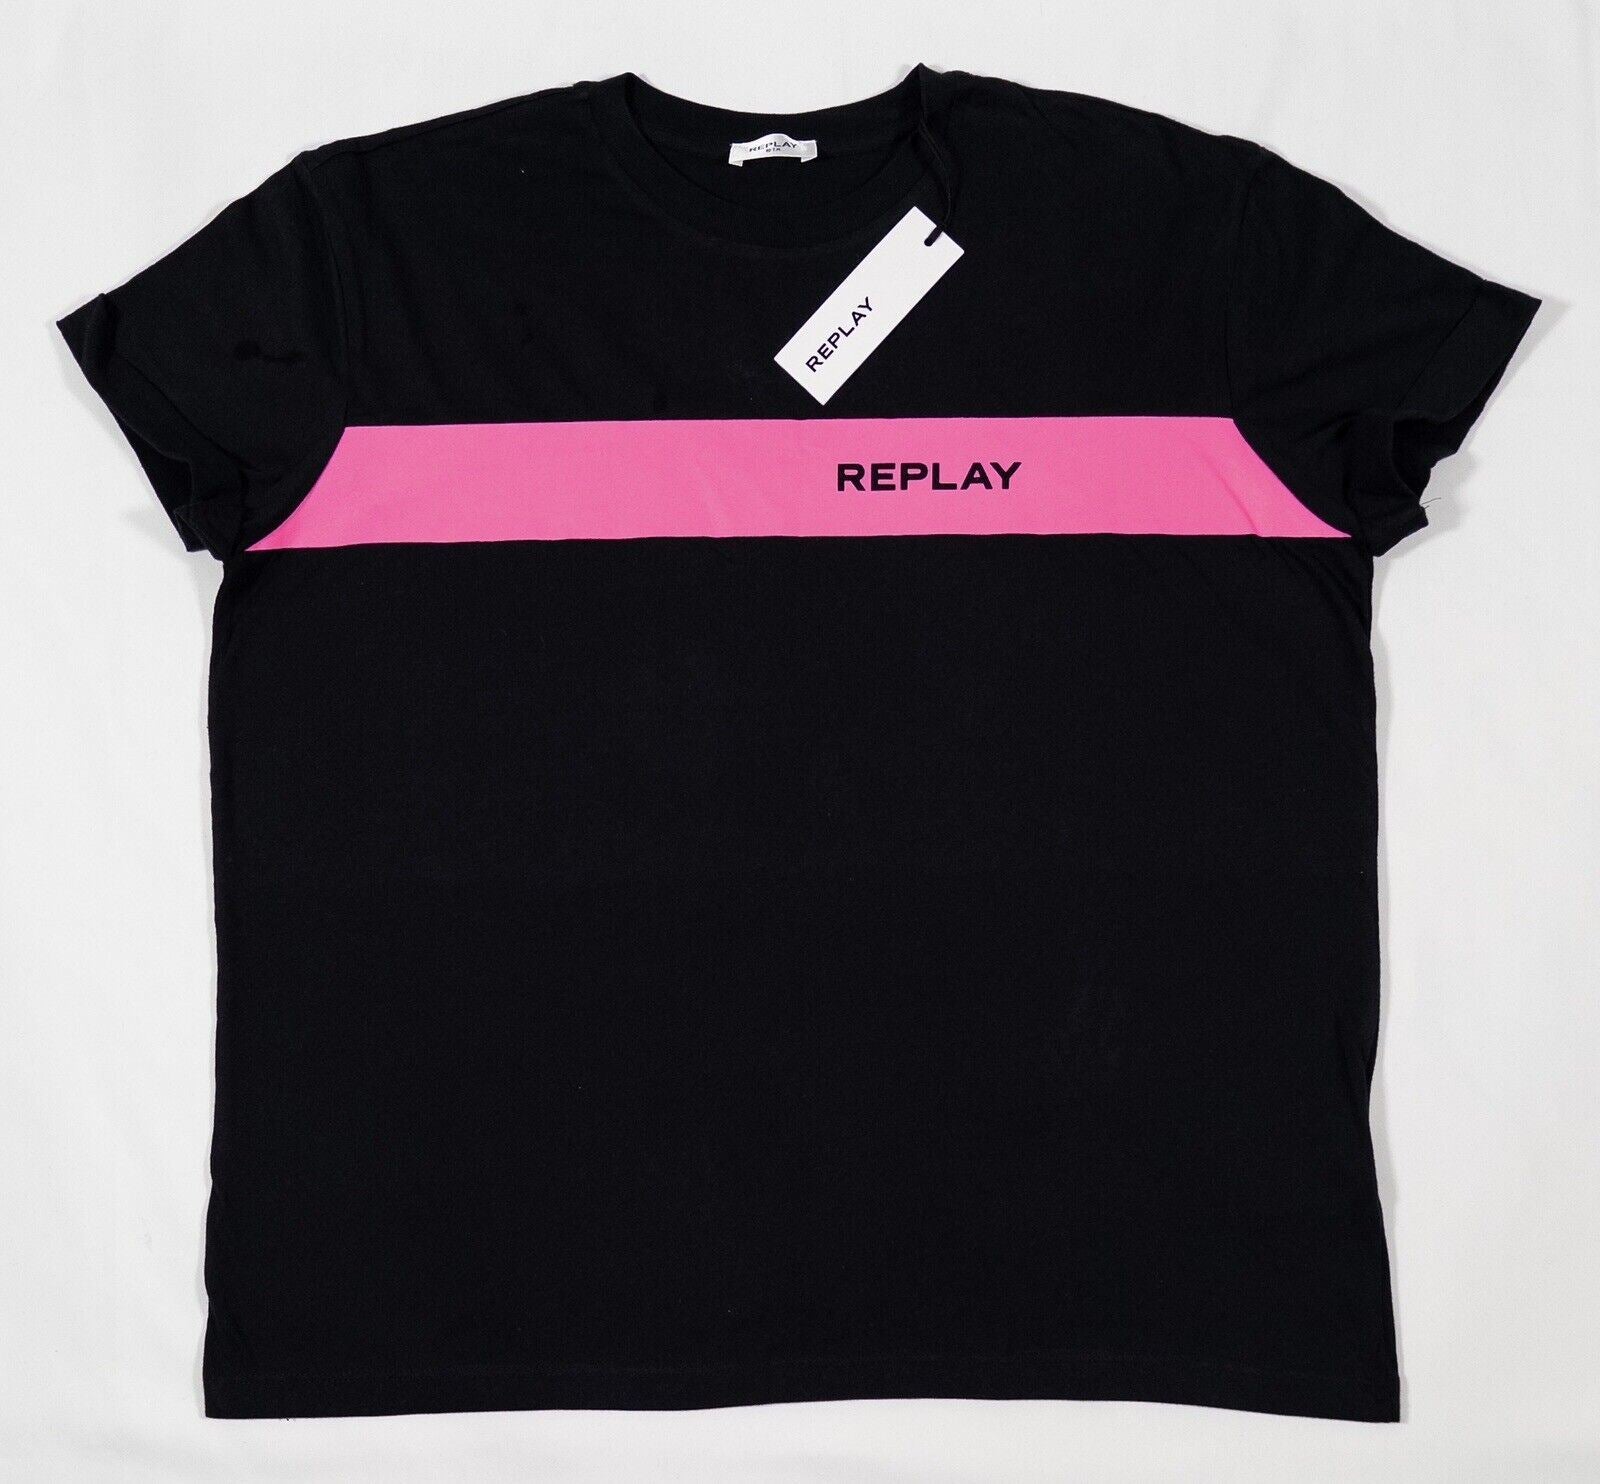 REPLAY Women's Black T-shirt Top Size Large